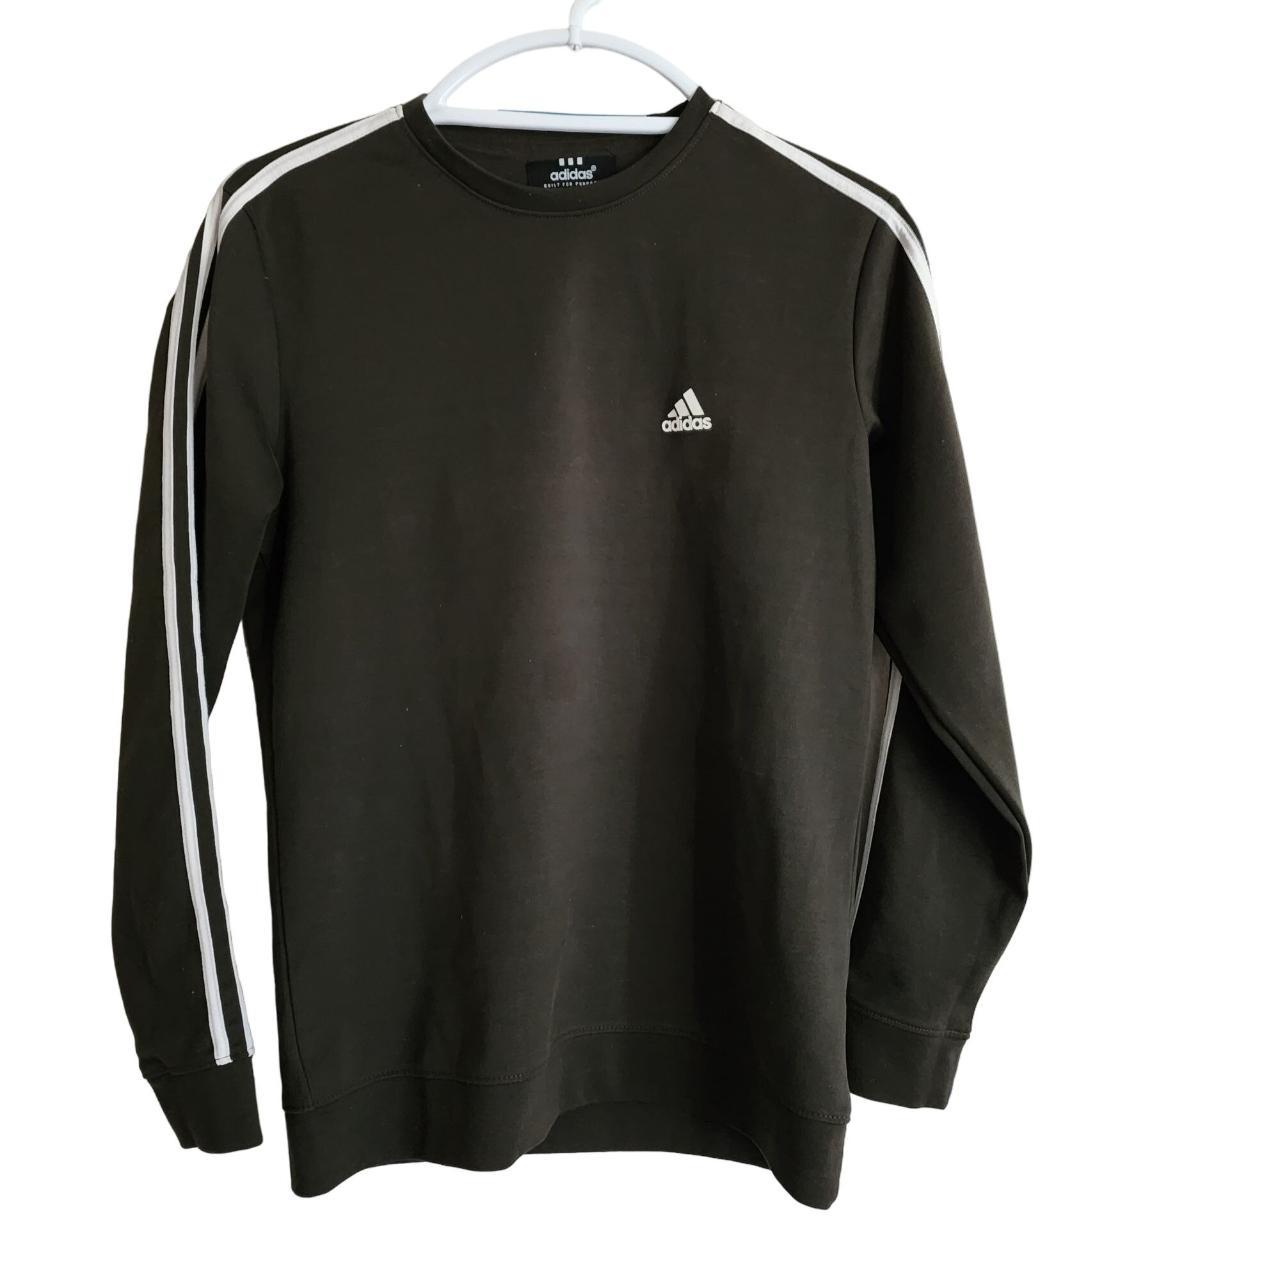 Adidas Men's Long Sleeve Medium Sweatshirt 100%... - Depop